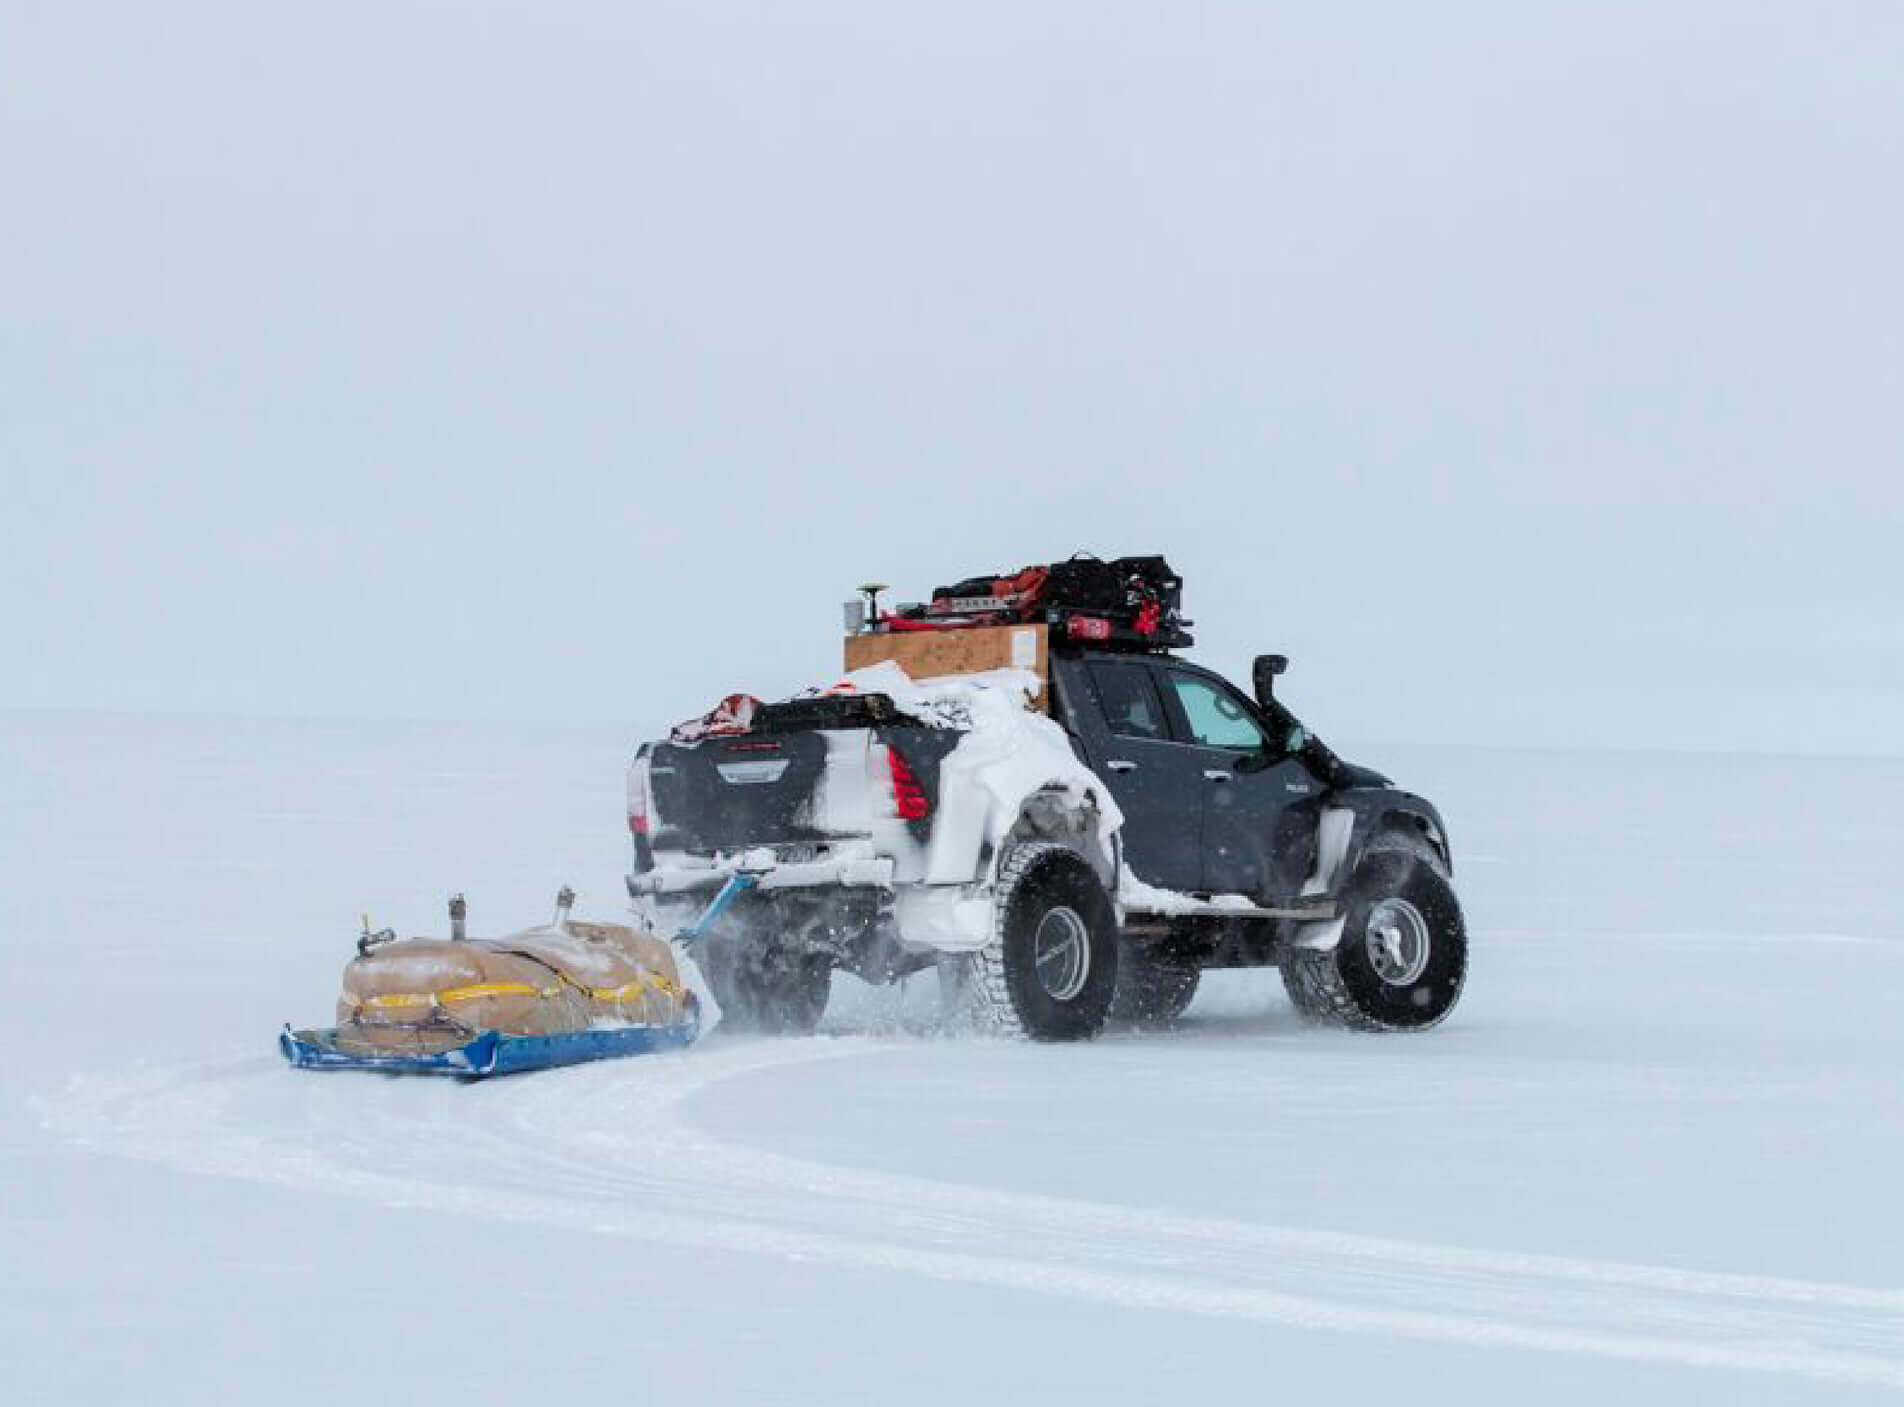 Aiframes Alaska sled gear.